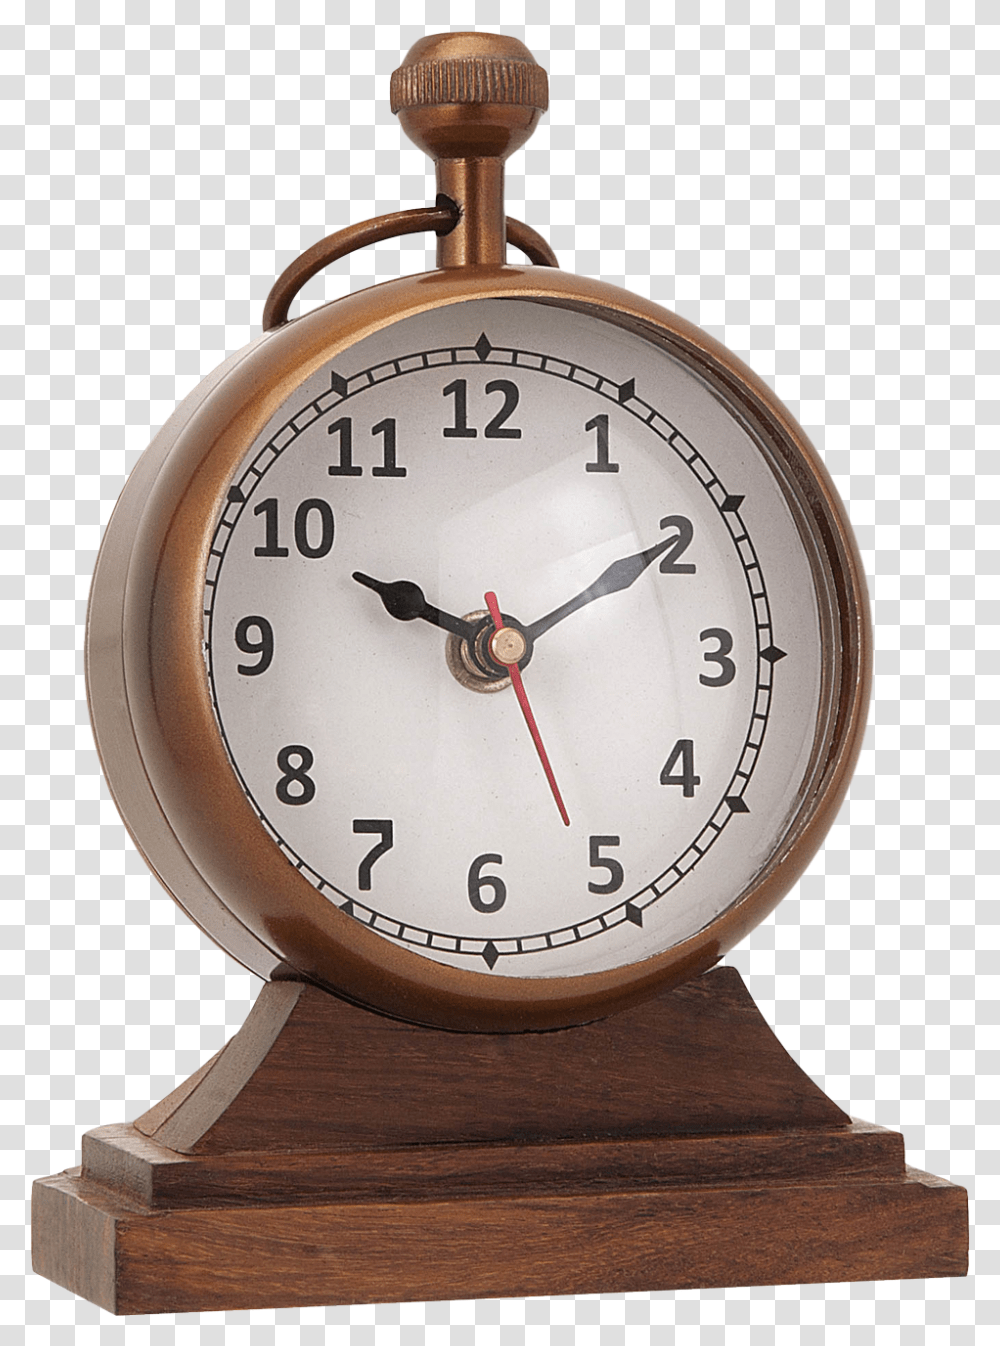 Wooden Alarm Clock Image Table Clocks, Clock Tower, Architecture, Building, Wristwatch Transparent Png